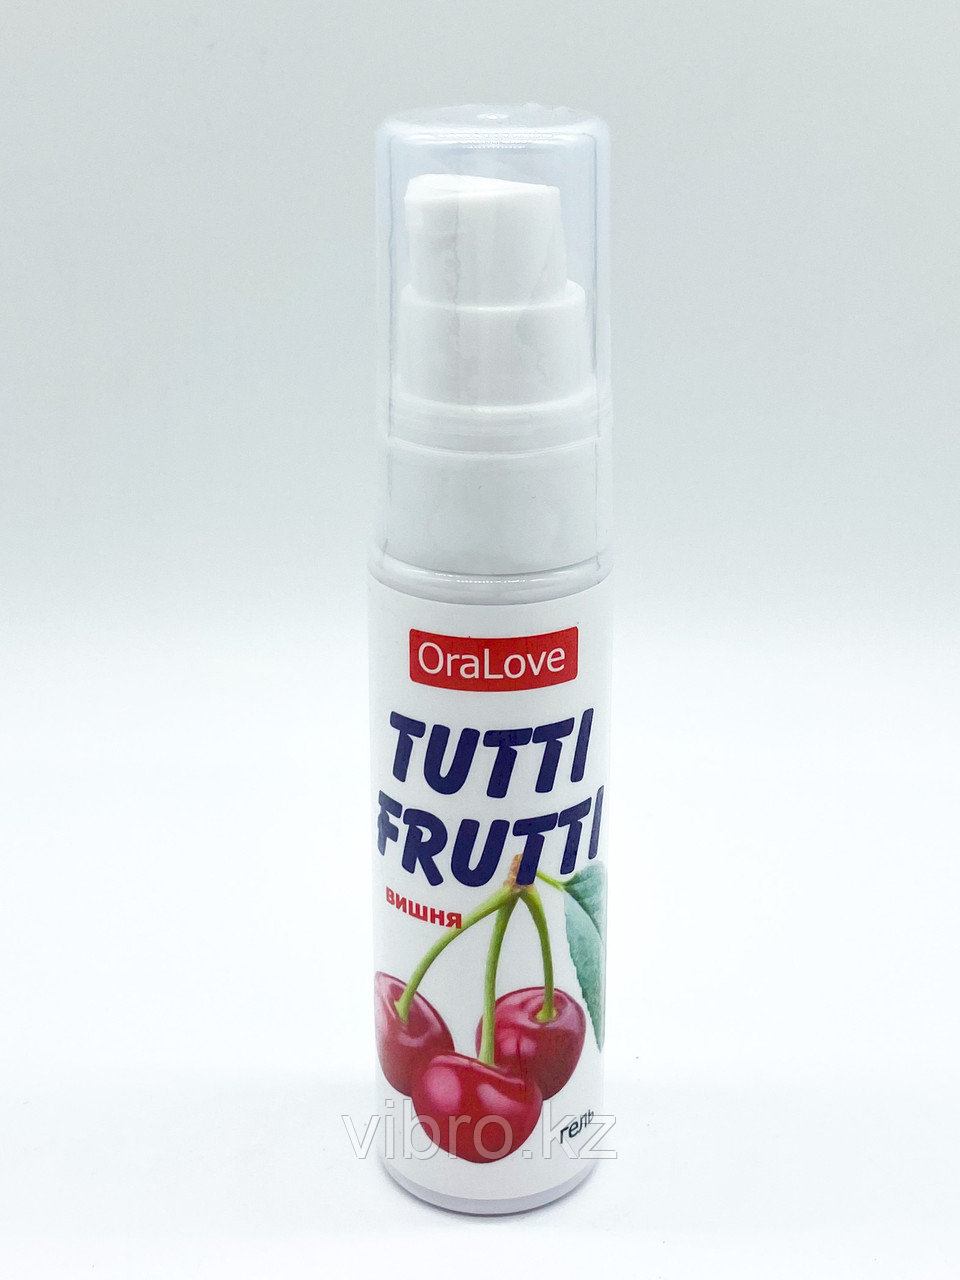 Съедобный Гель-лубрикант "Tutti Frutti" со вкусом вишни. 30мл